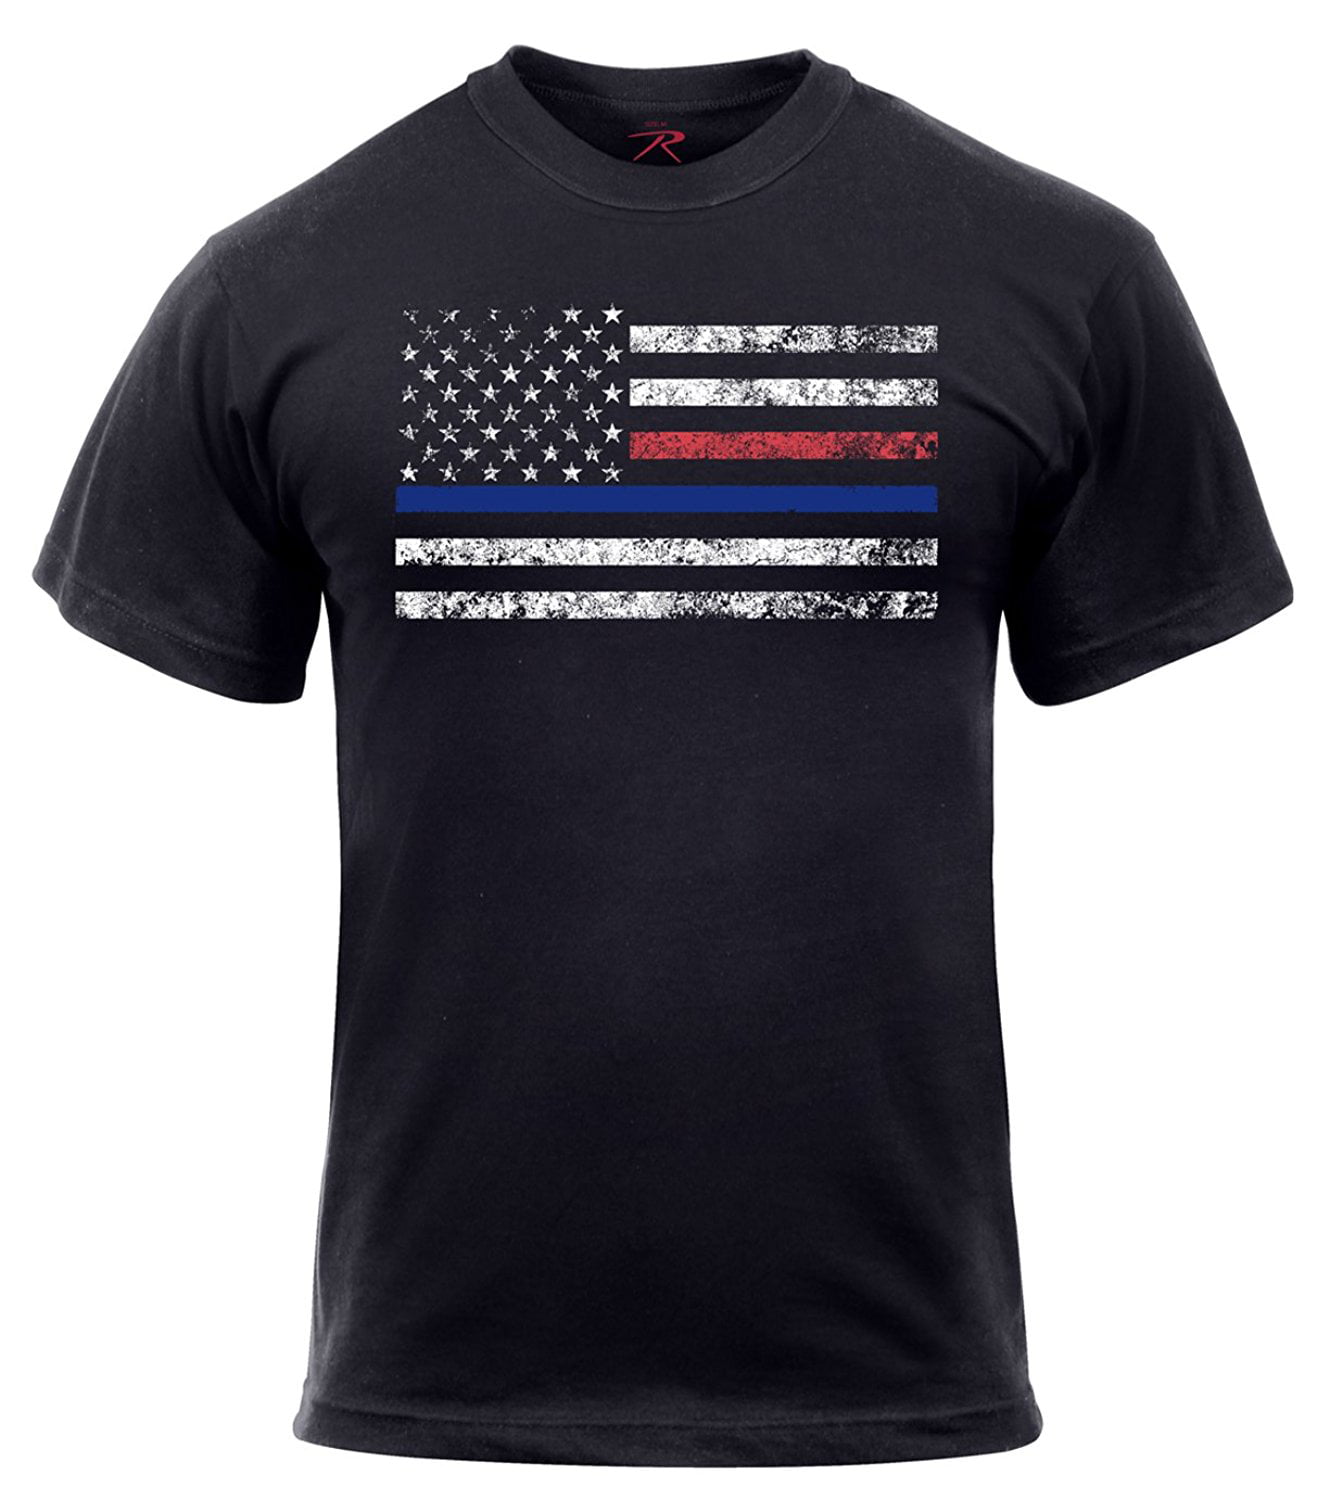 Thin Red Line & Blue Line Black Mens Firefighter Law Enforcement T-Shirt 61660 